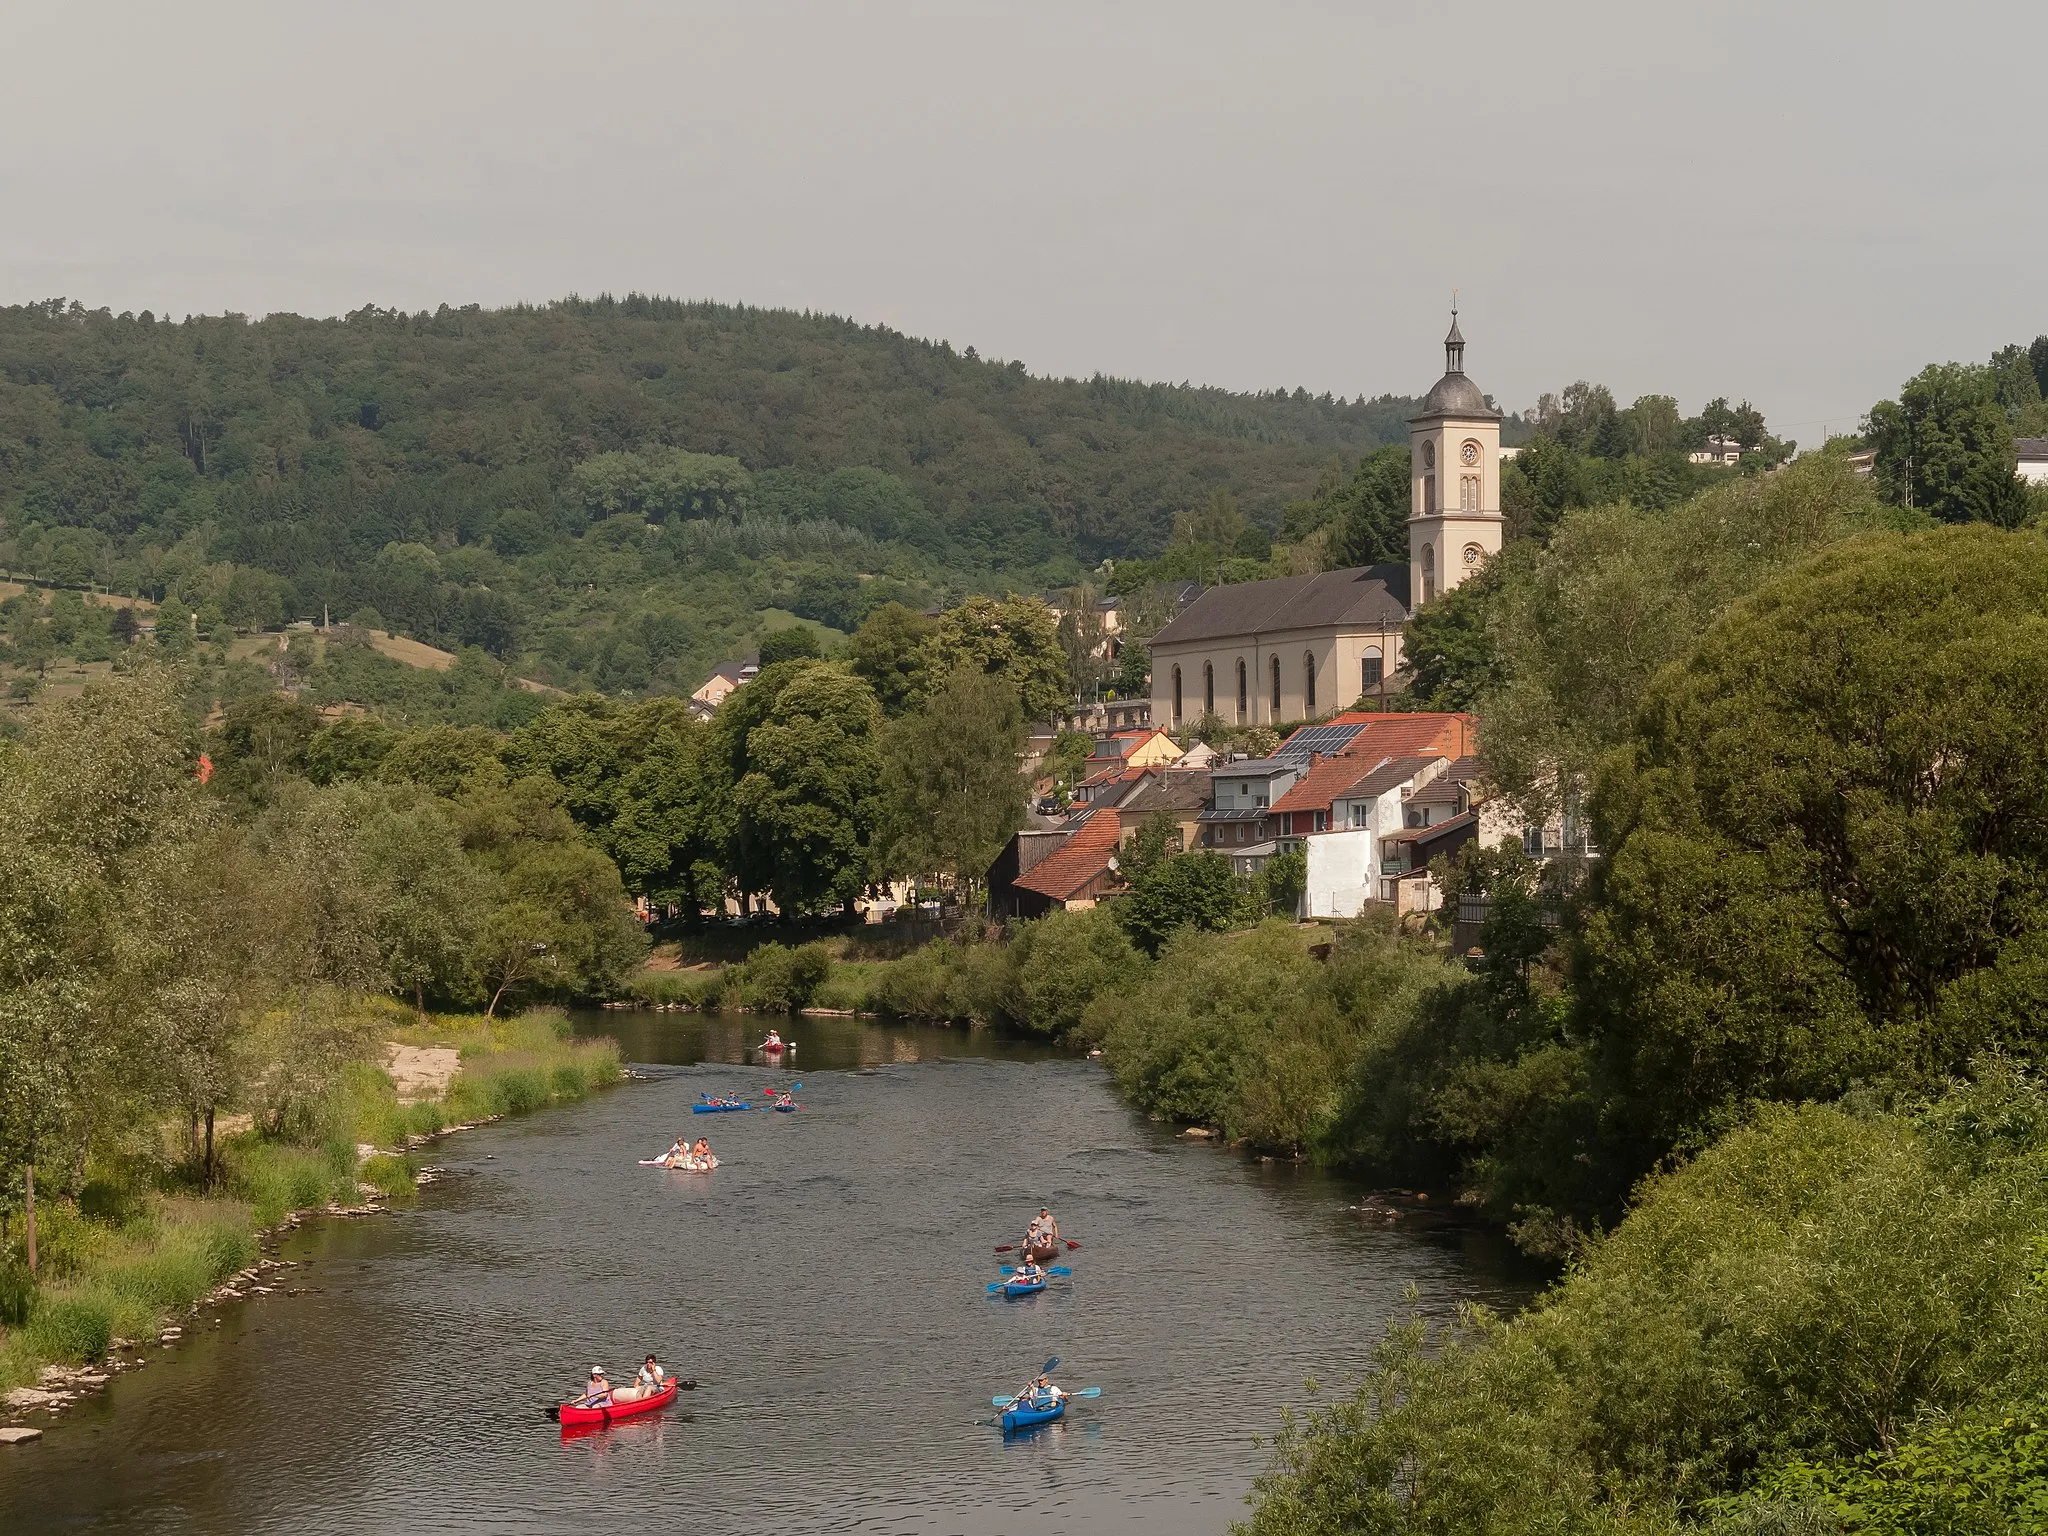 Image of Bollendorf